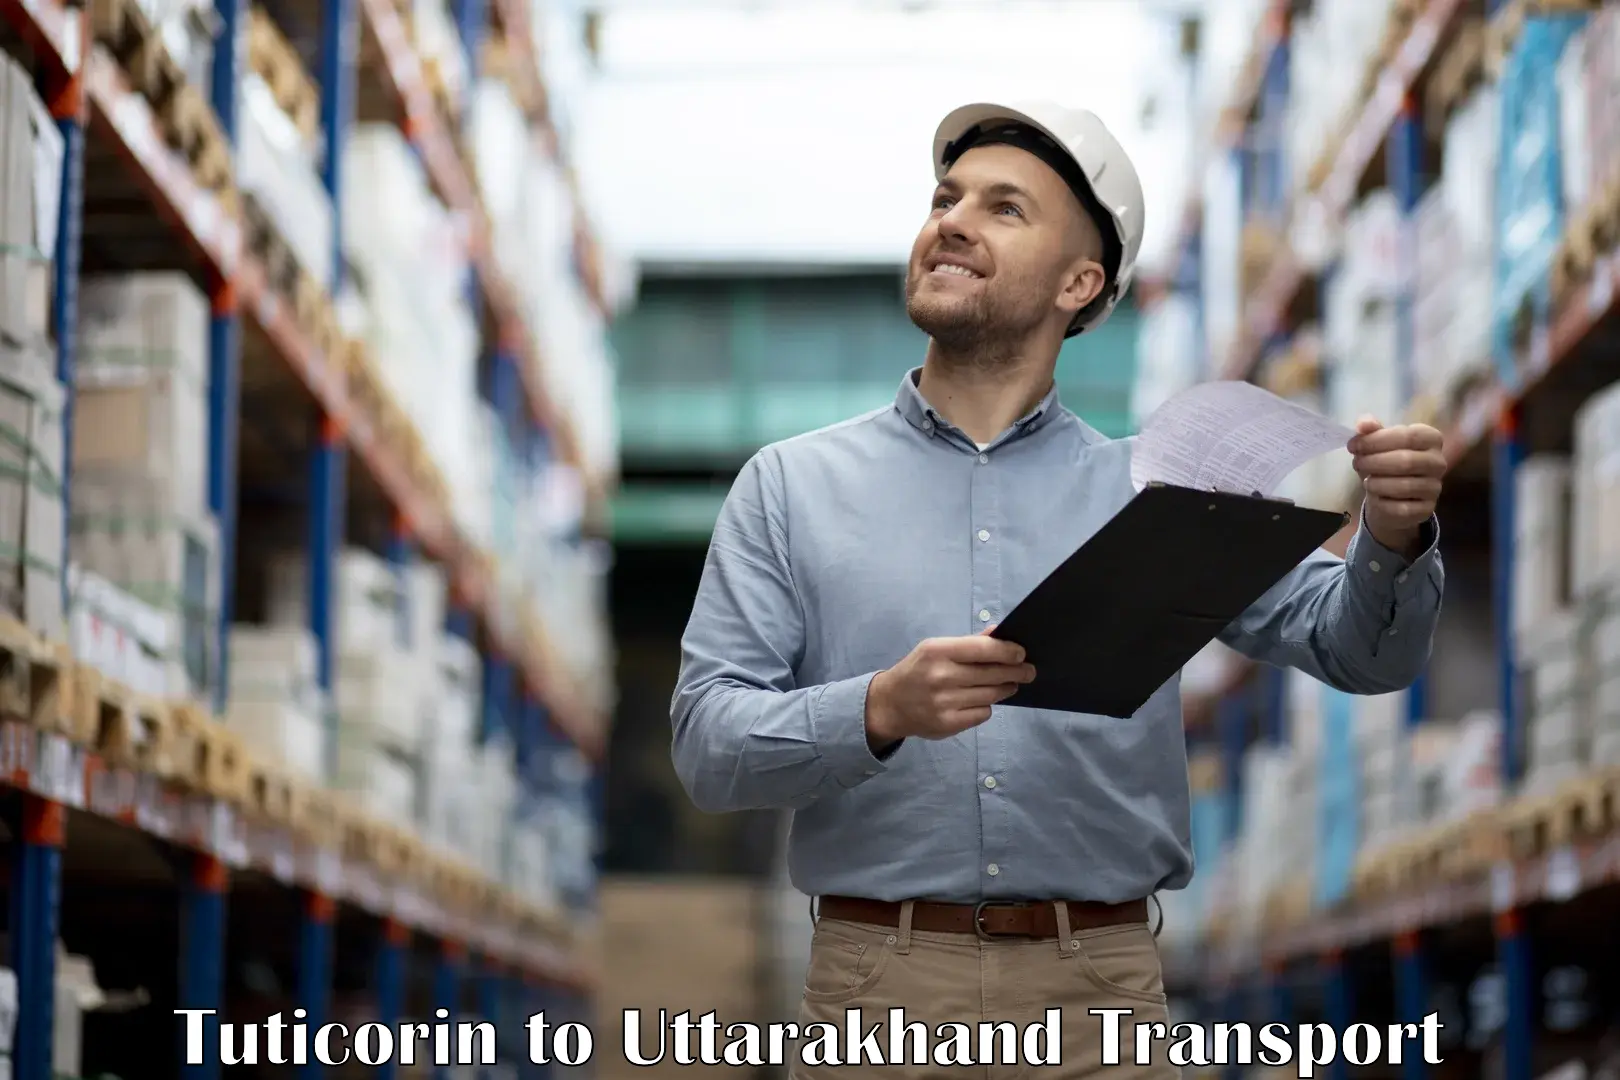 Online transport service Tuticorin to Uttarakhand